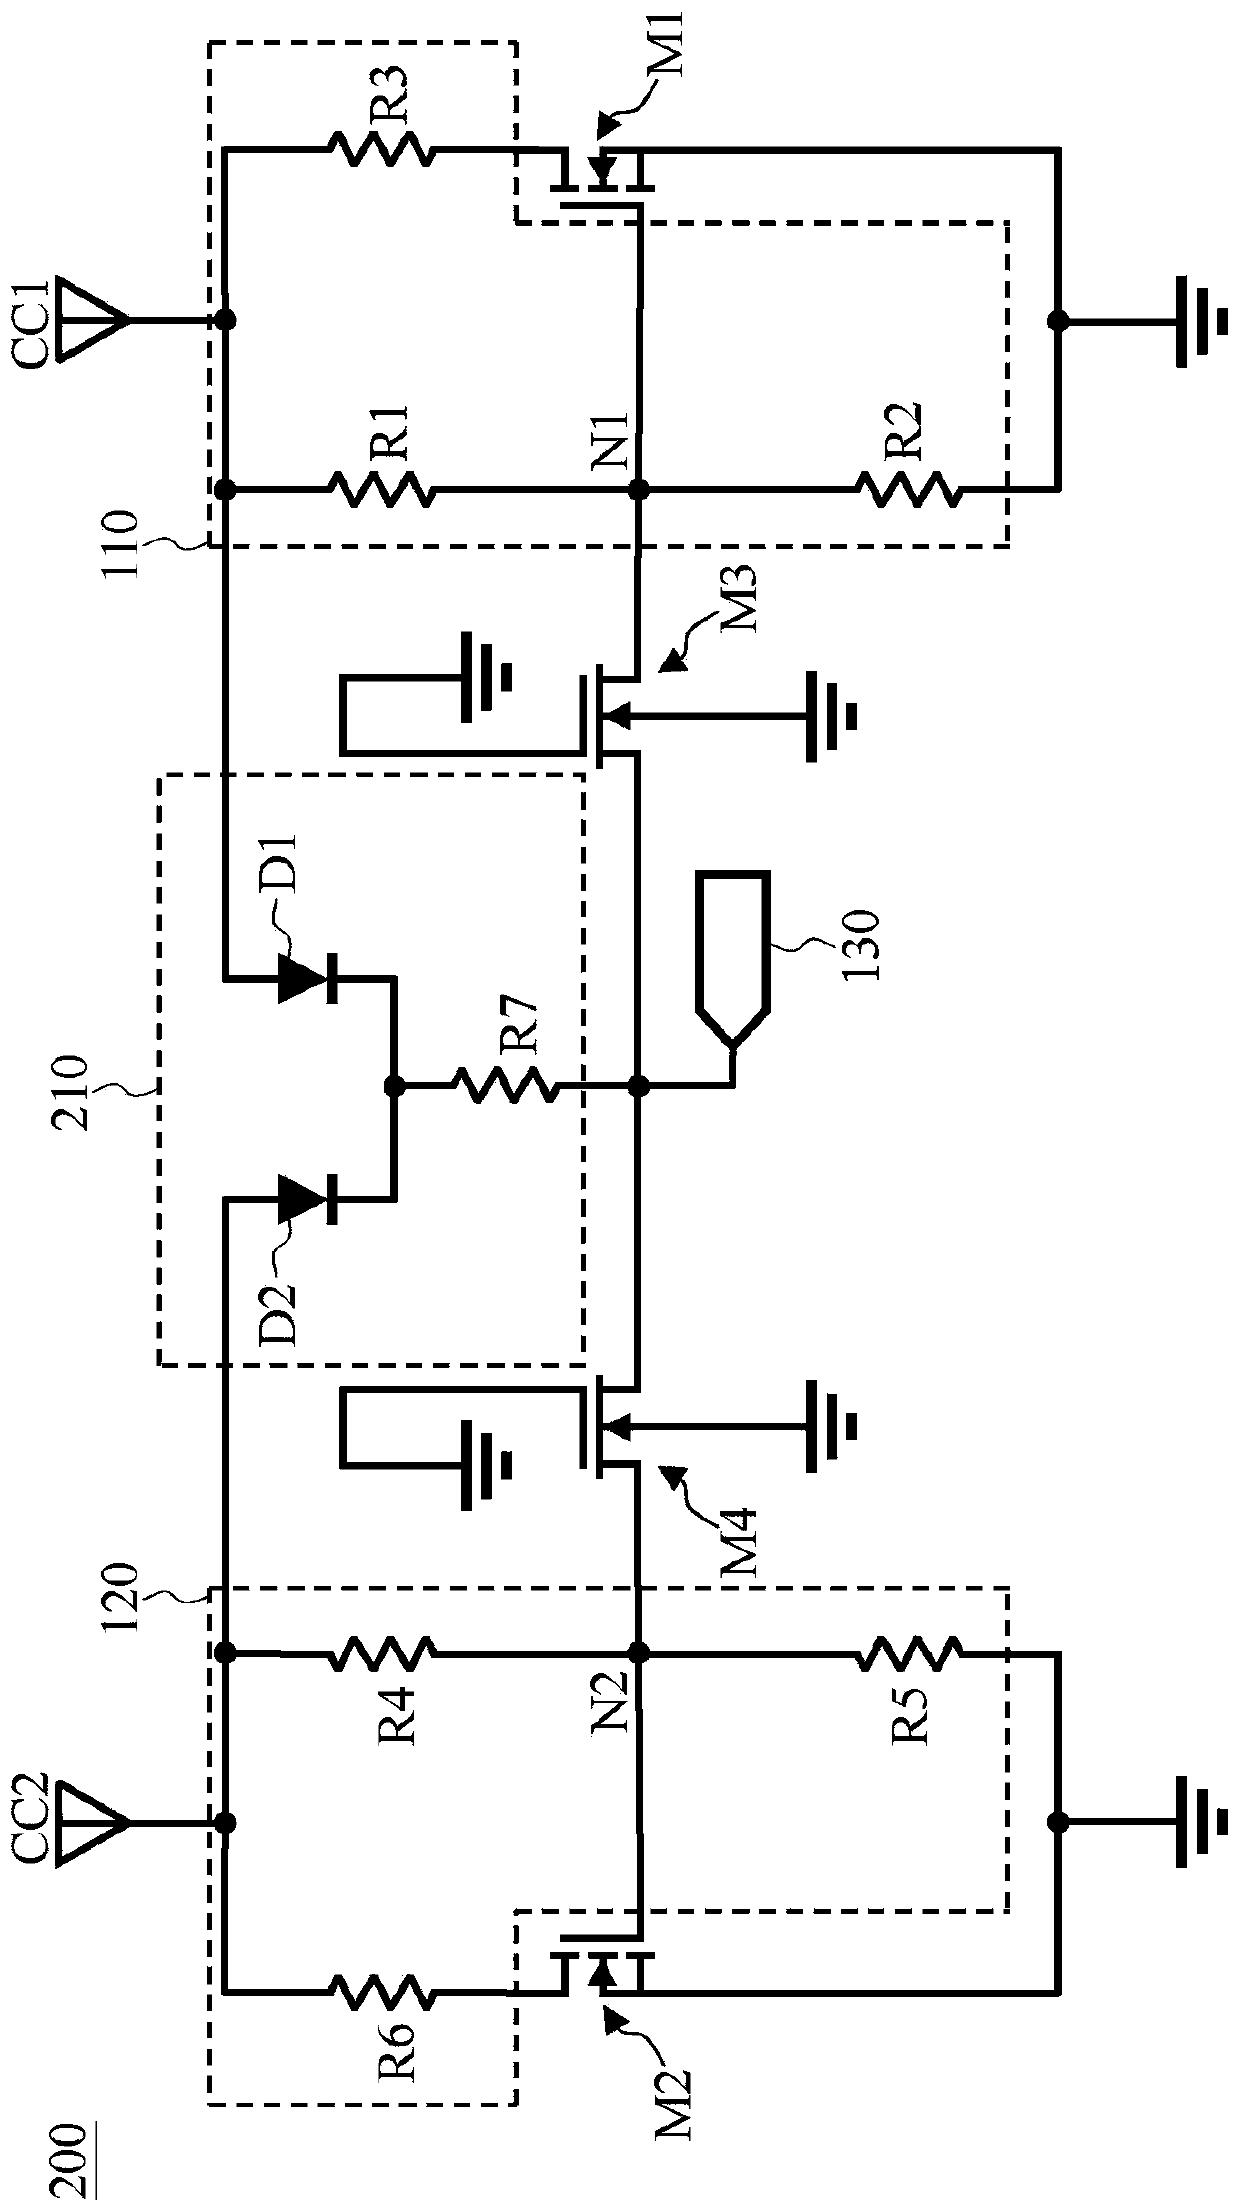 Control circuit for universal serial bus control circuit